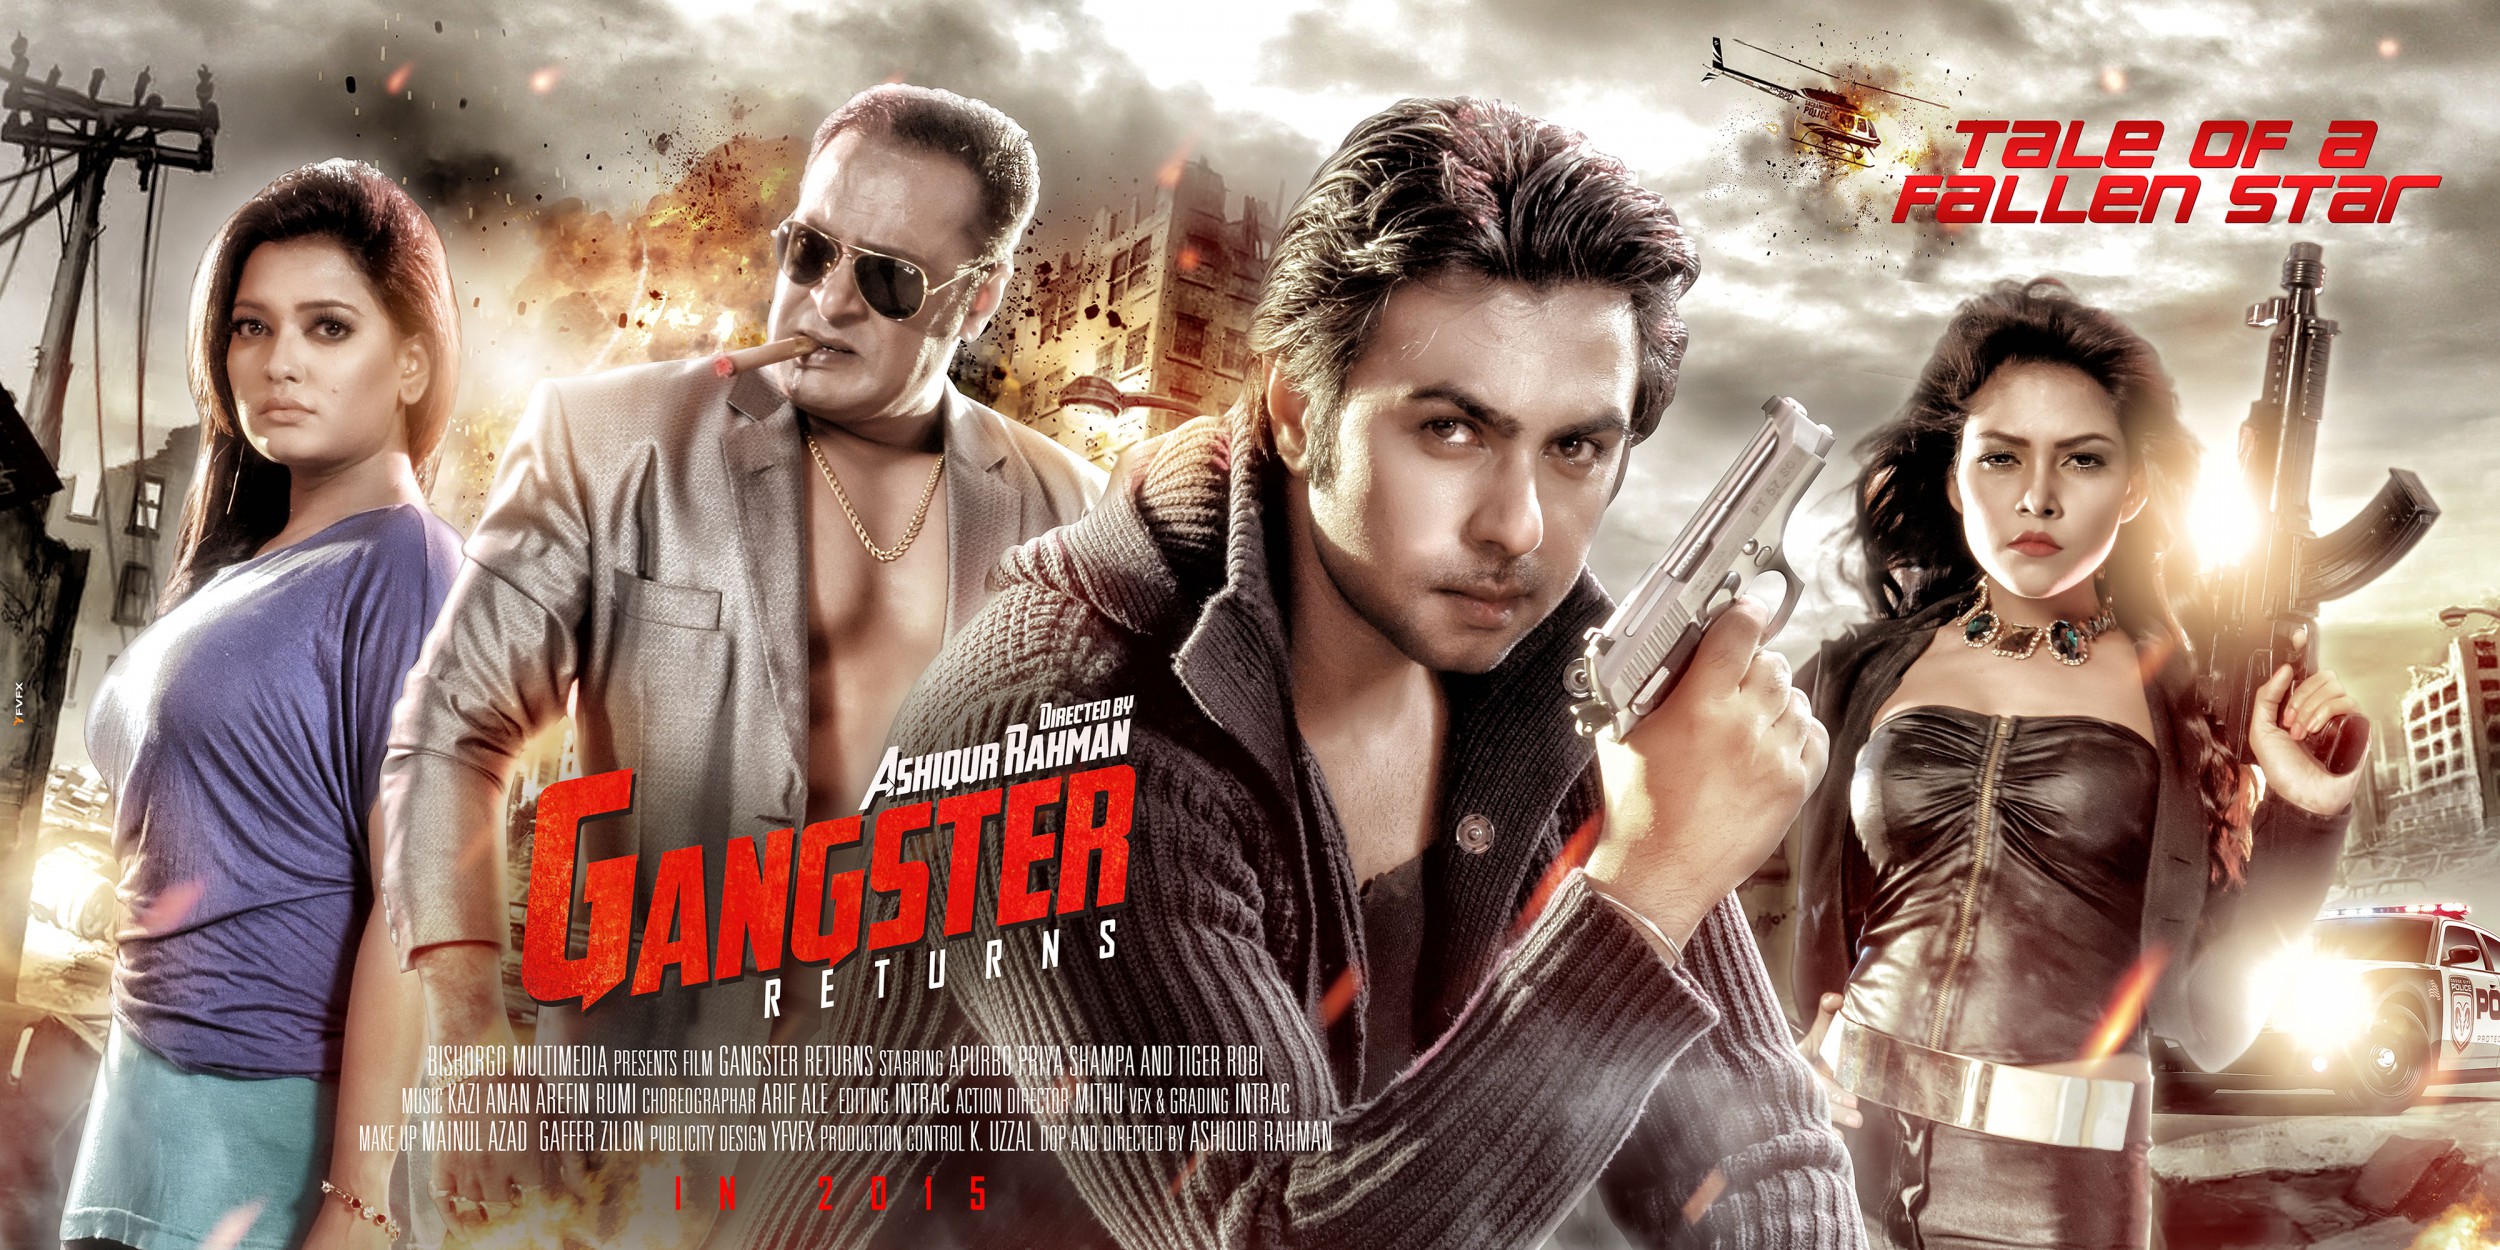 Mega Sized Movie Poster Image for Gangster Returns (#8 of 9)